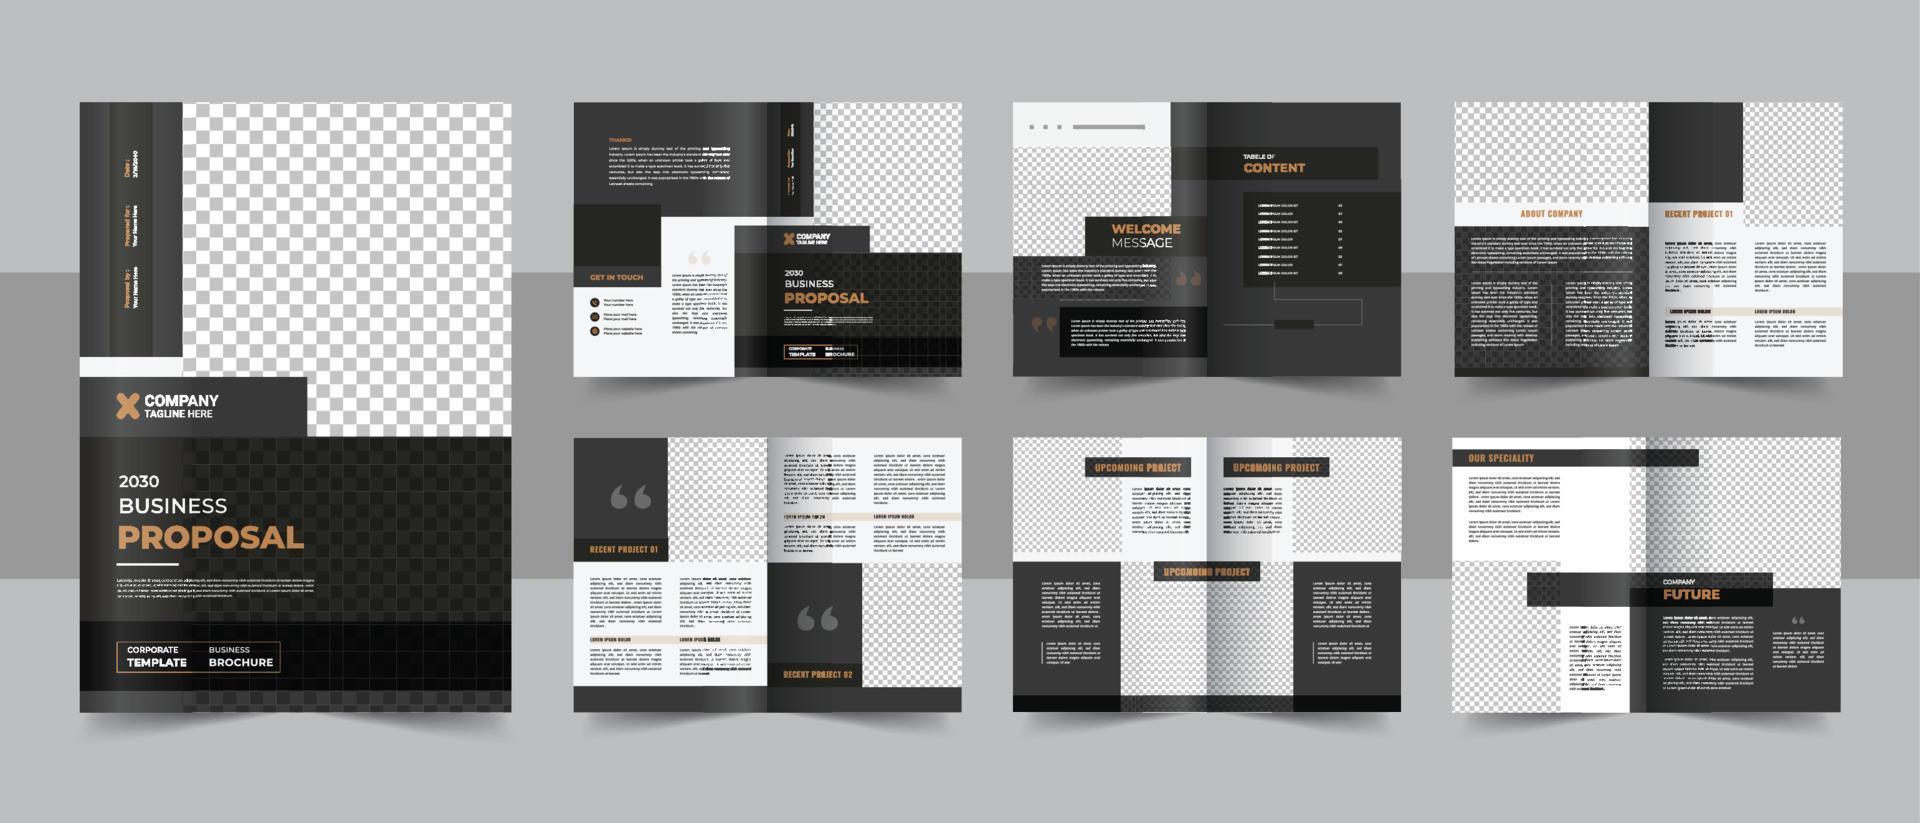 Company profile brochure template or multipage business brochure design template vector